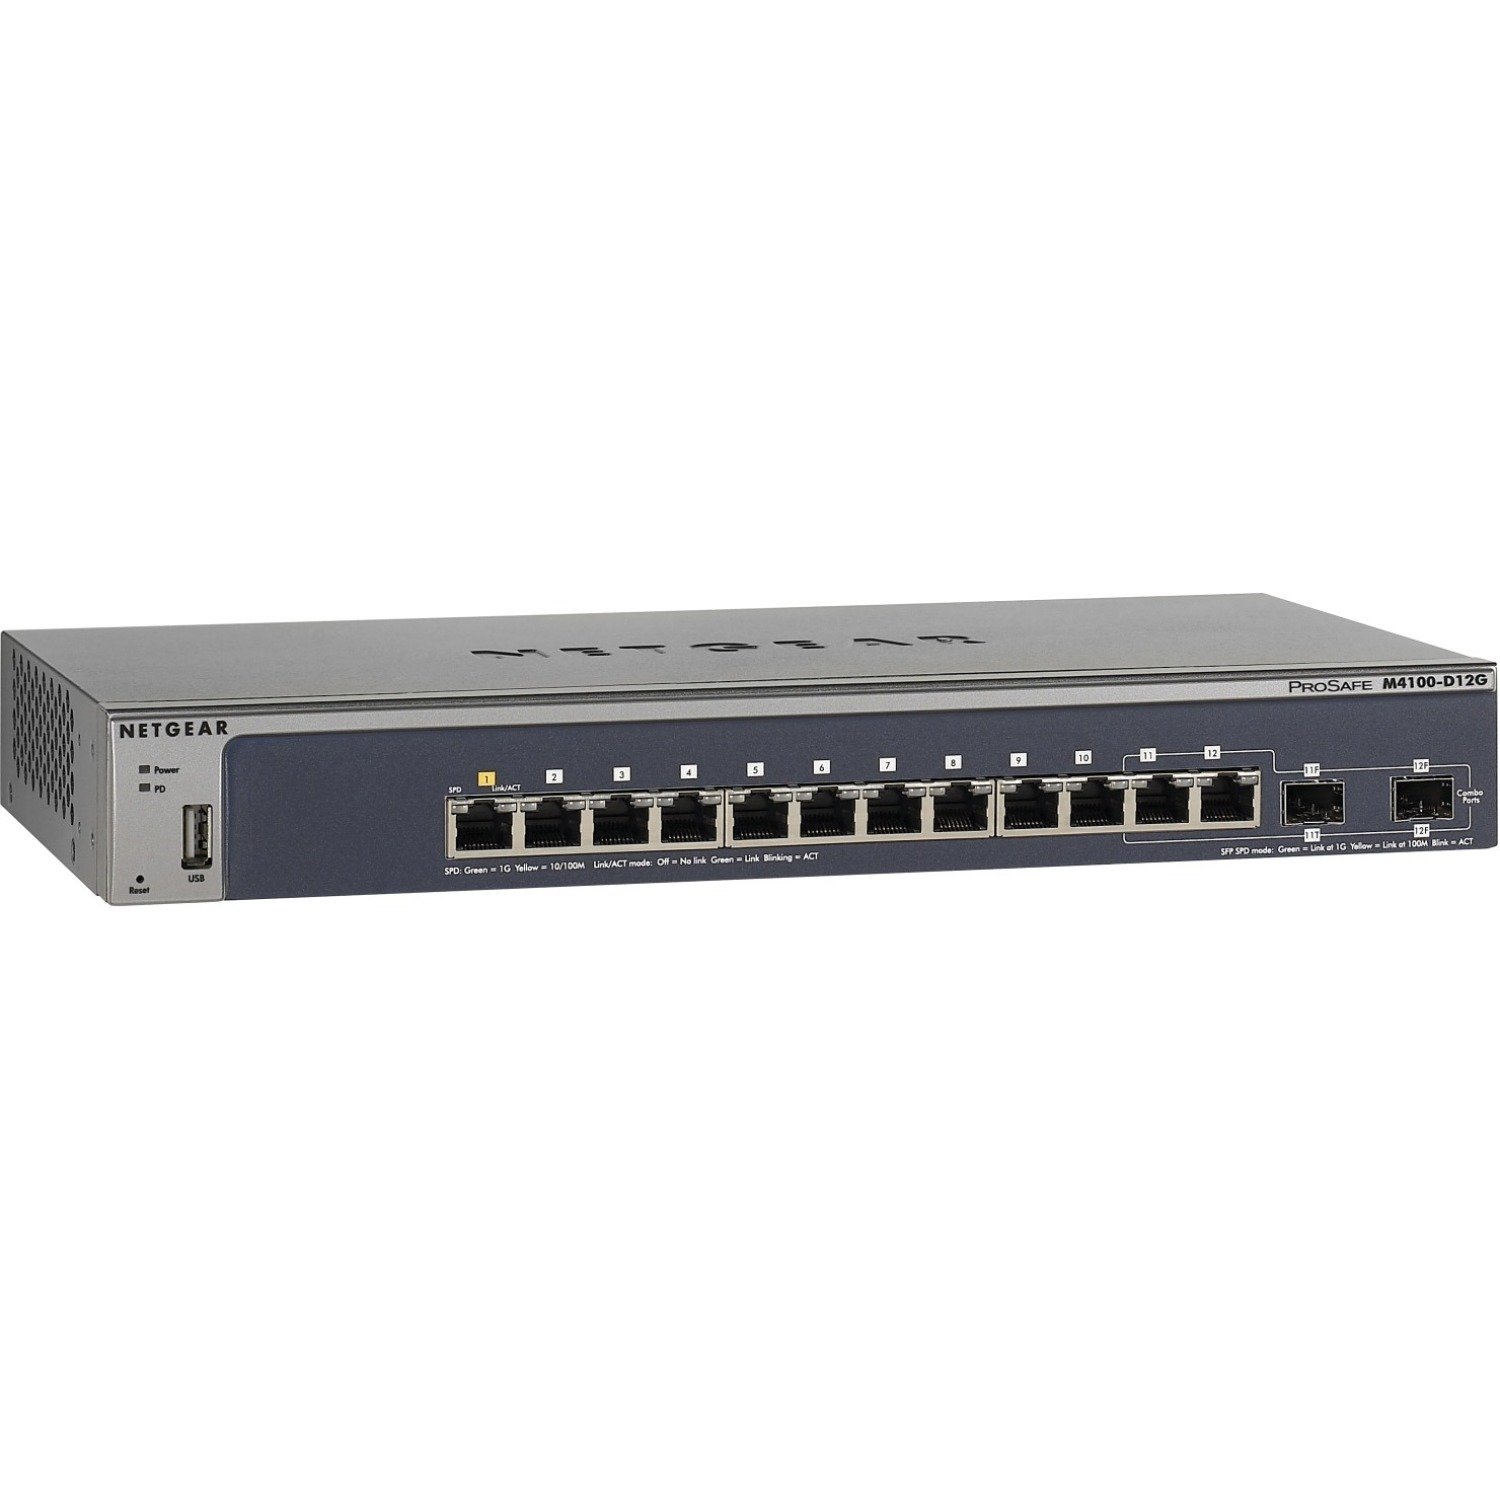 Netgear ProSafe M4100-D12G 12 Port Gigabit Ethernet Switch